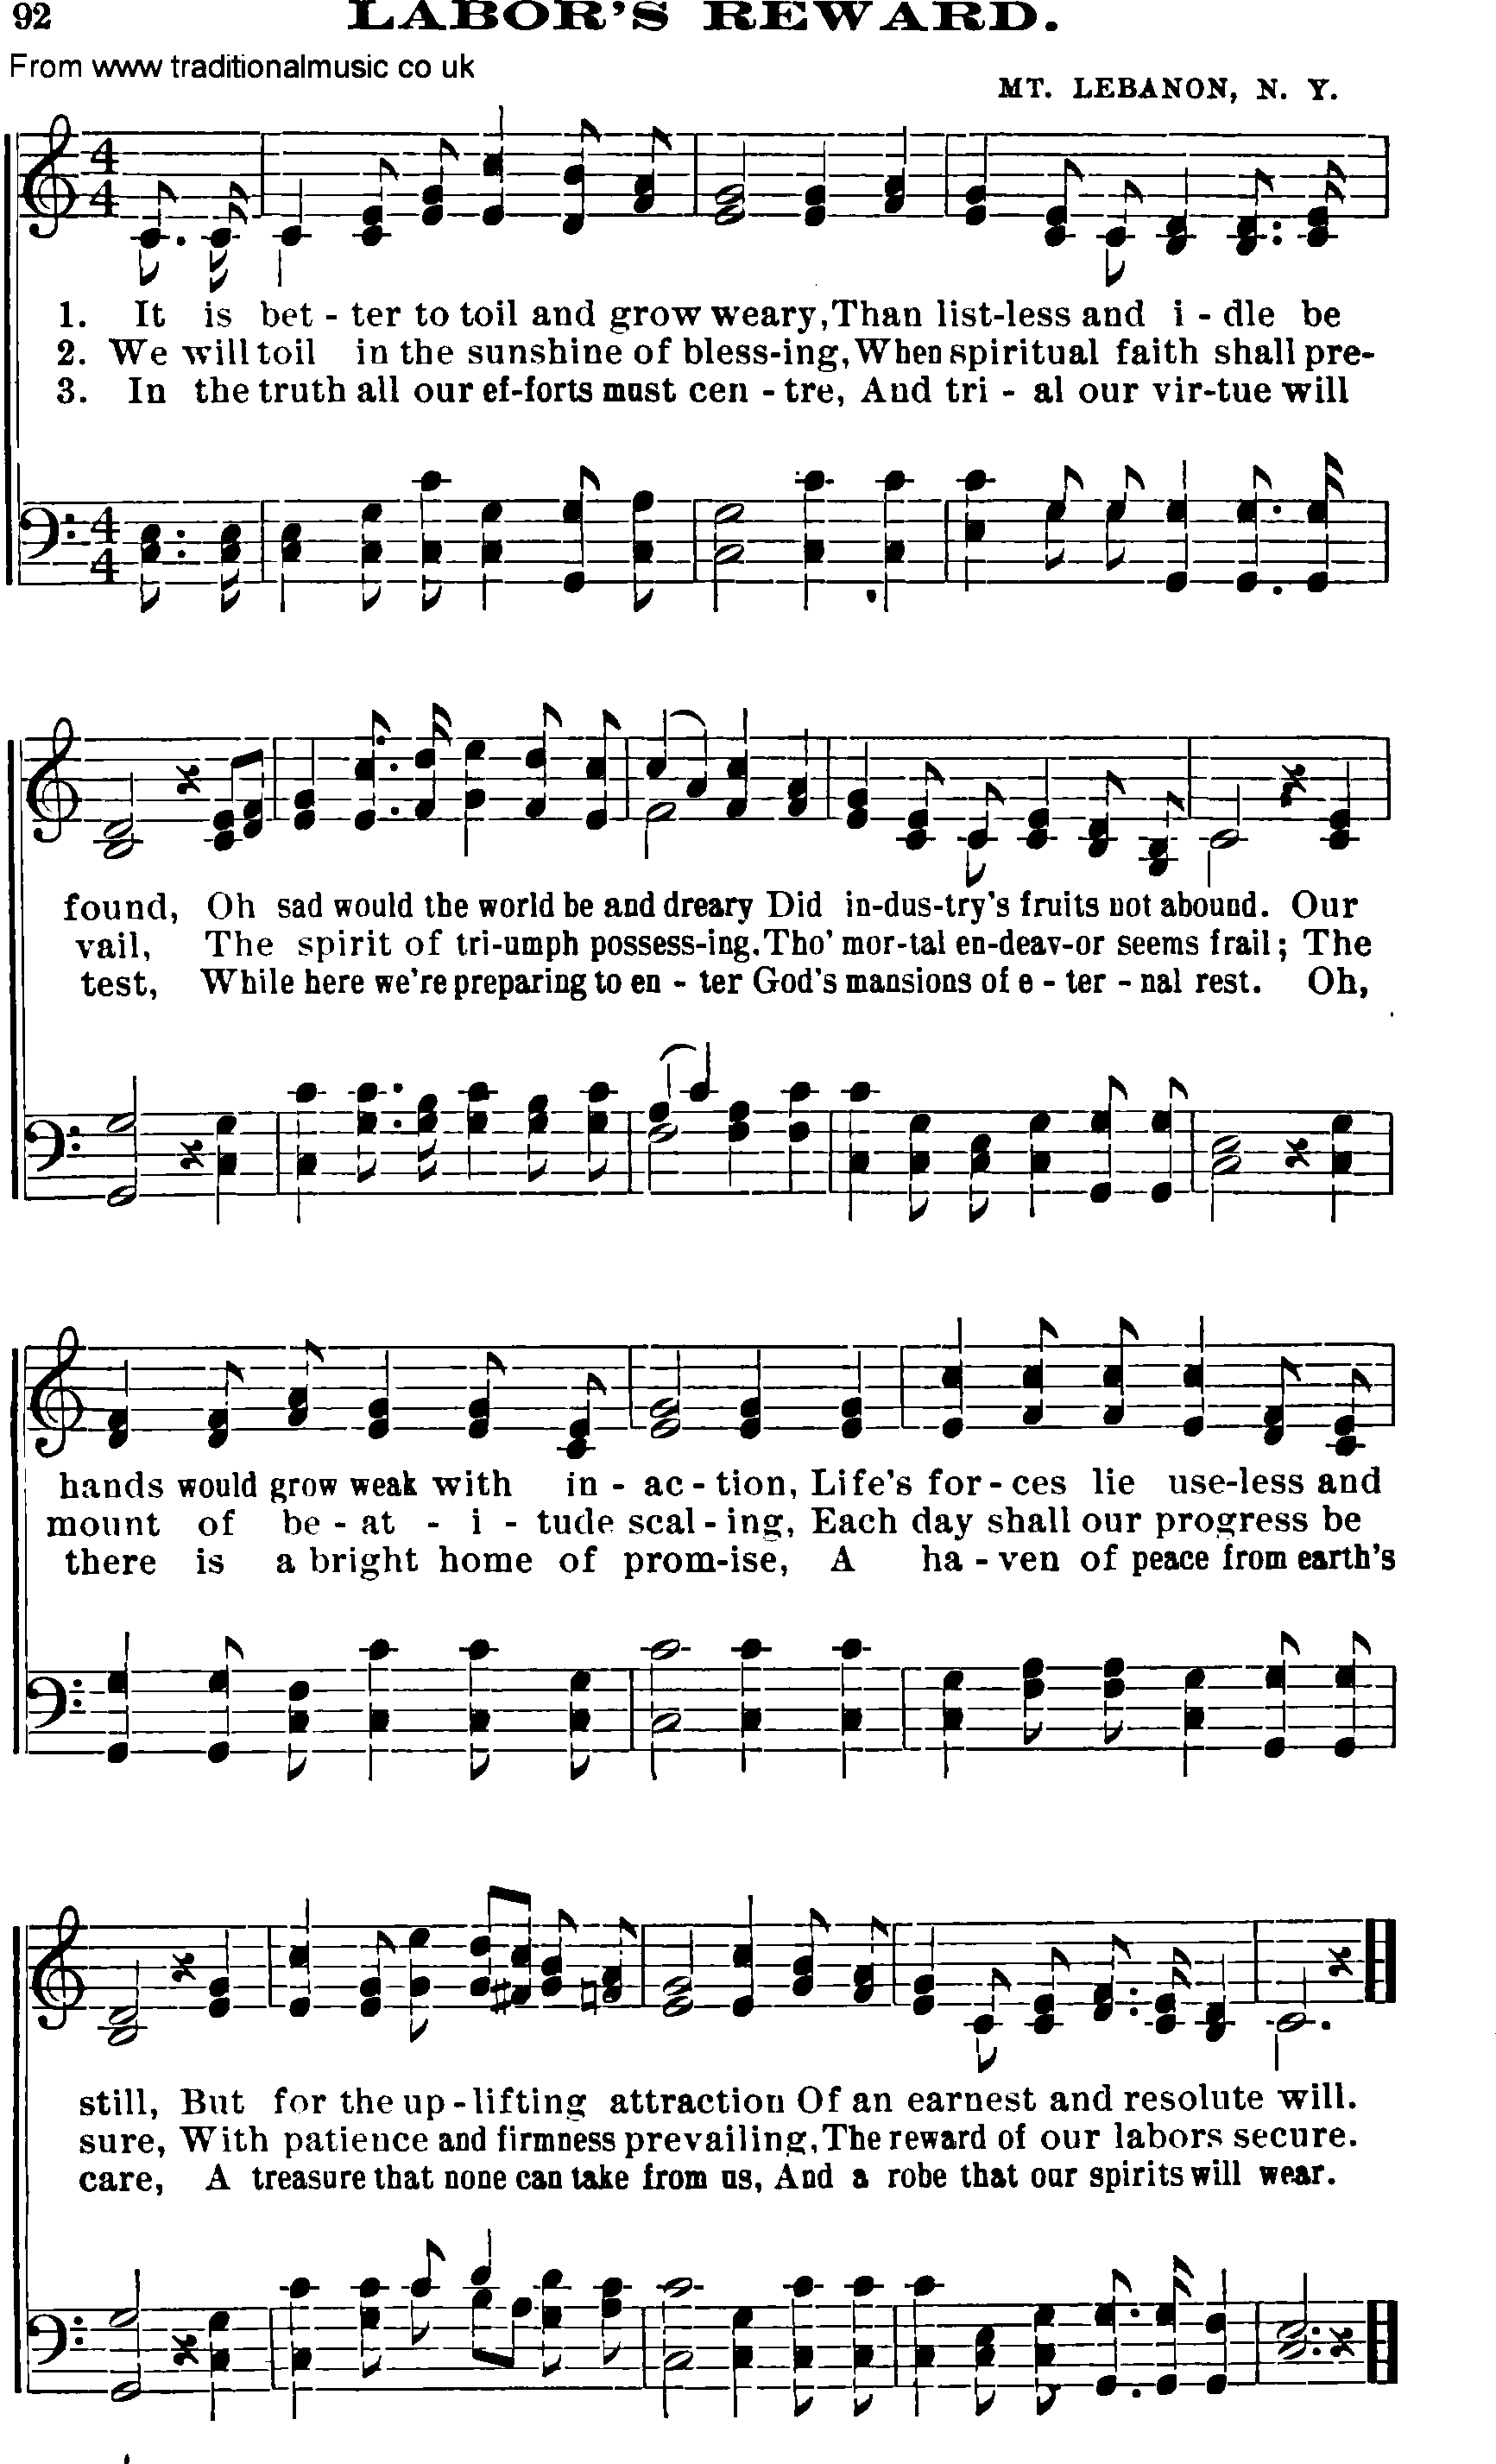 Shaker Music collection, Hymn: labor's reward, sheetmusic and PDF